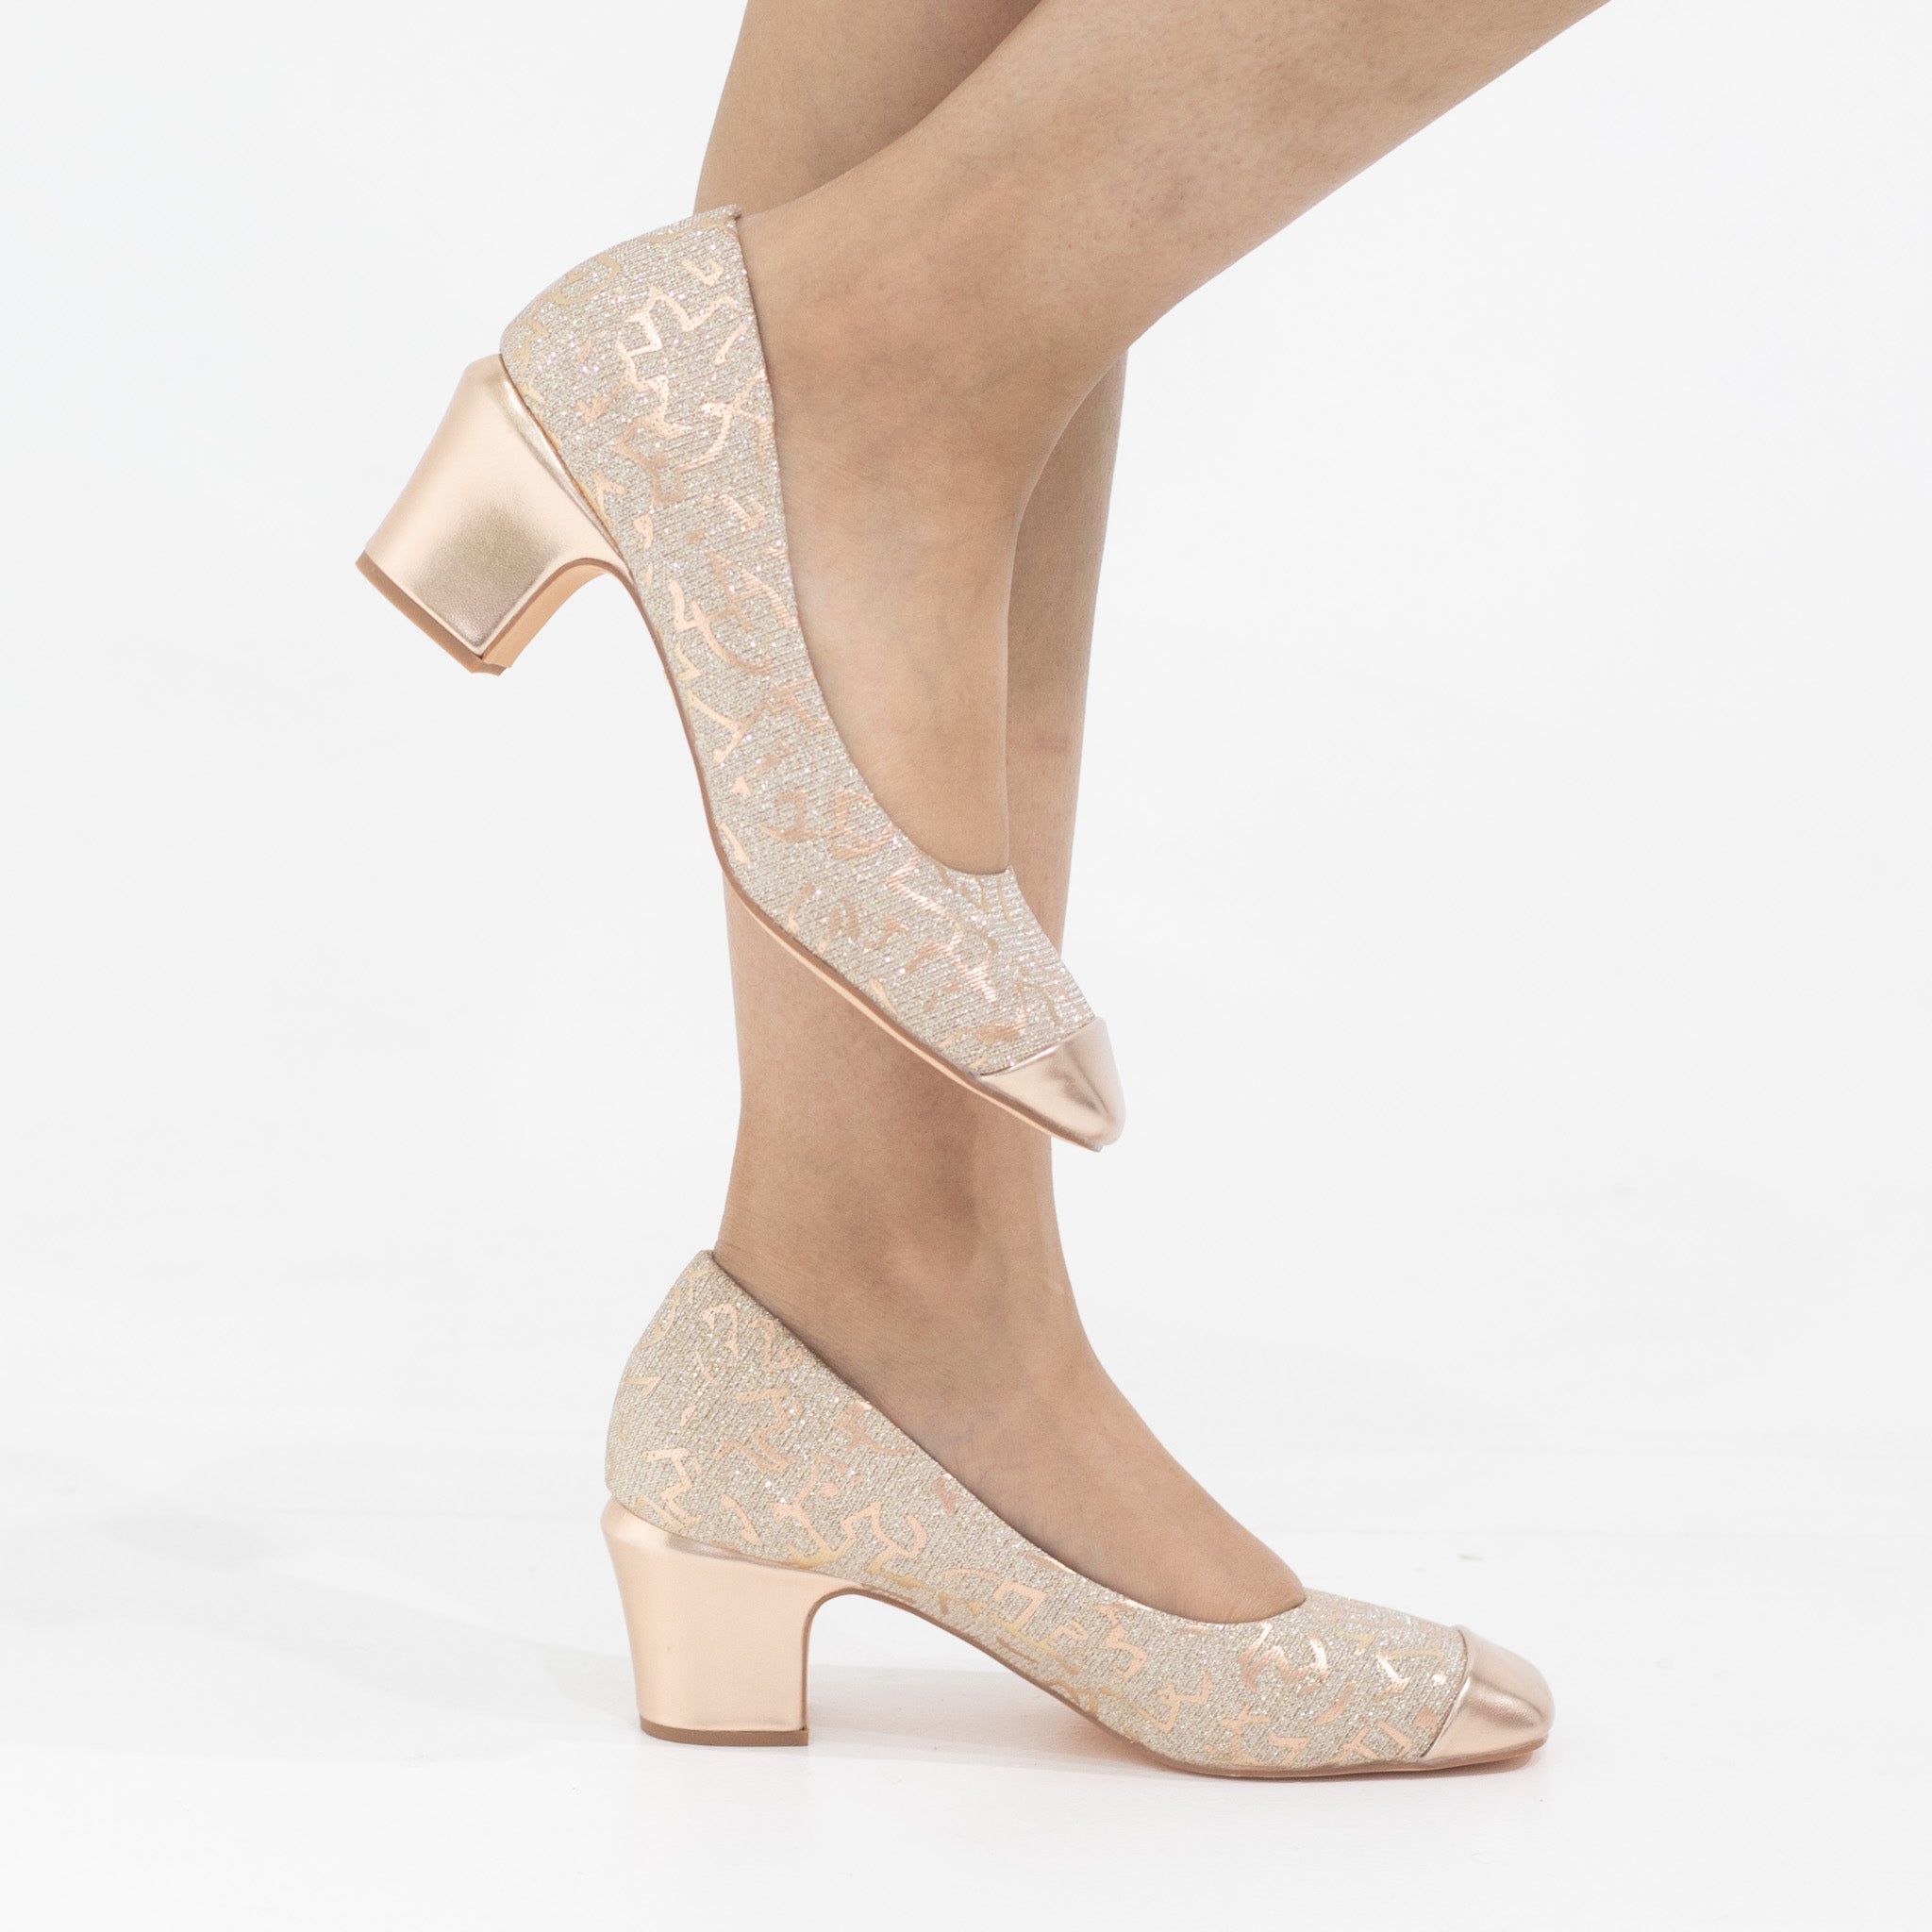 Delilah comfy 5cm heel pointy court shoe champagne